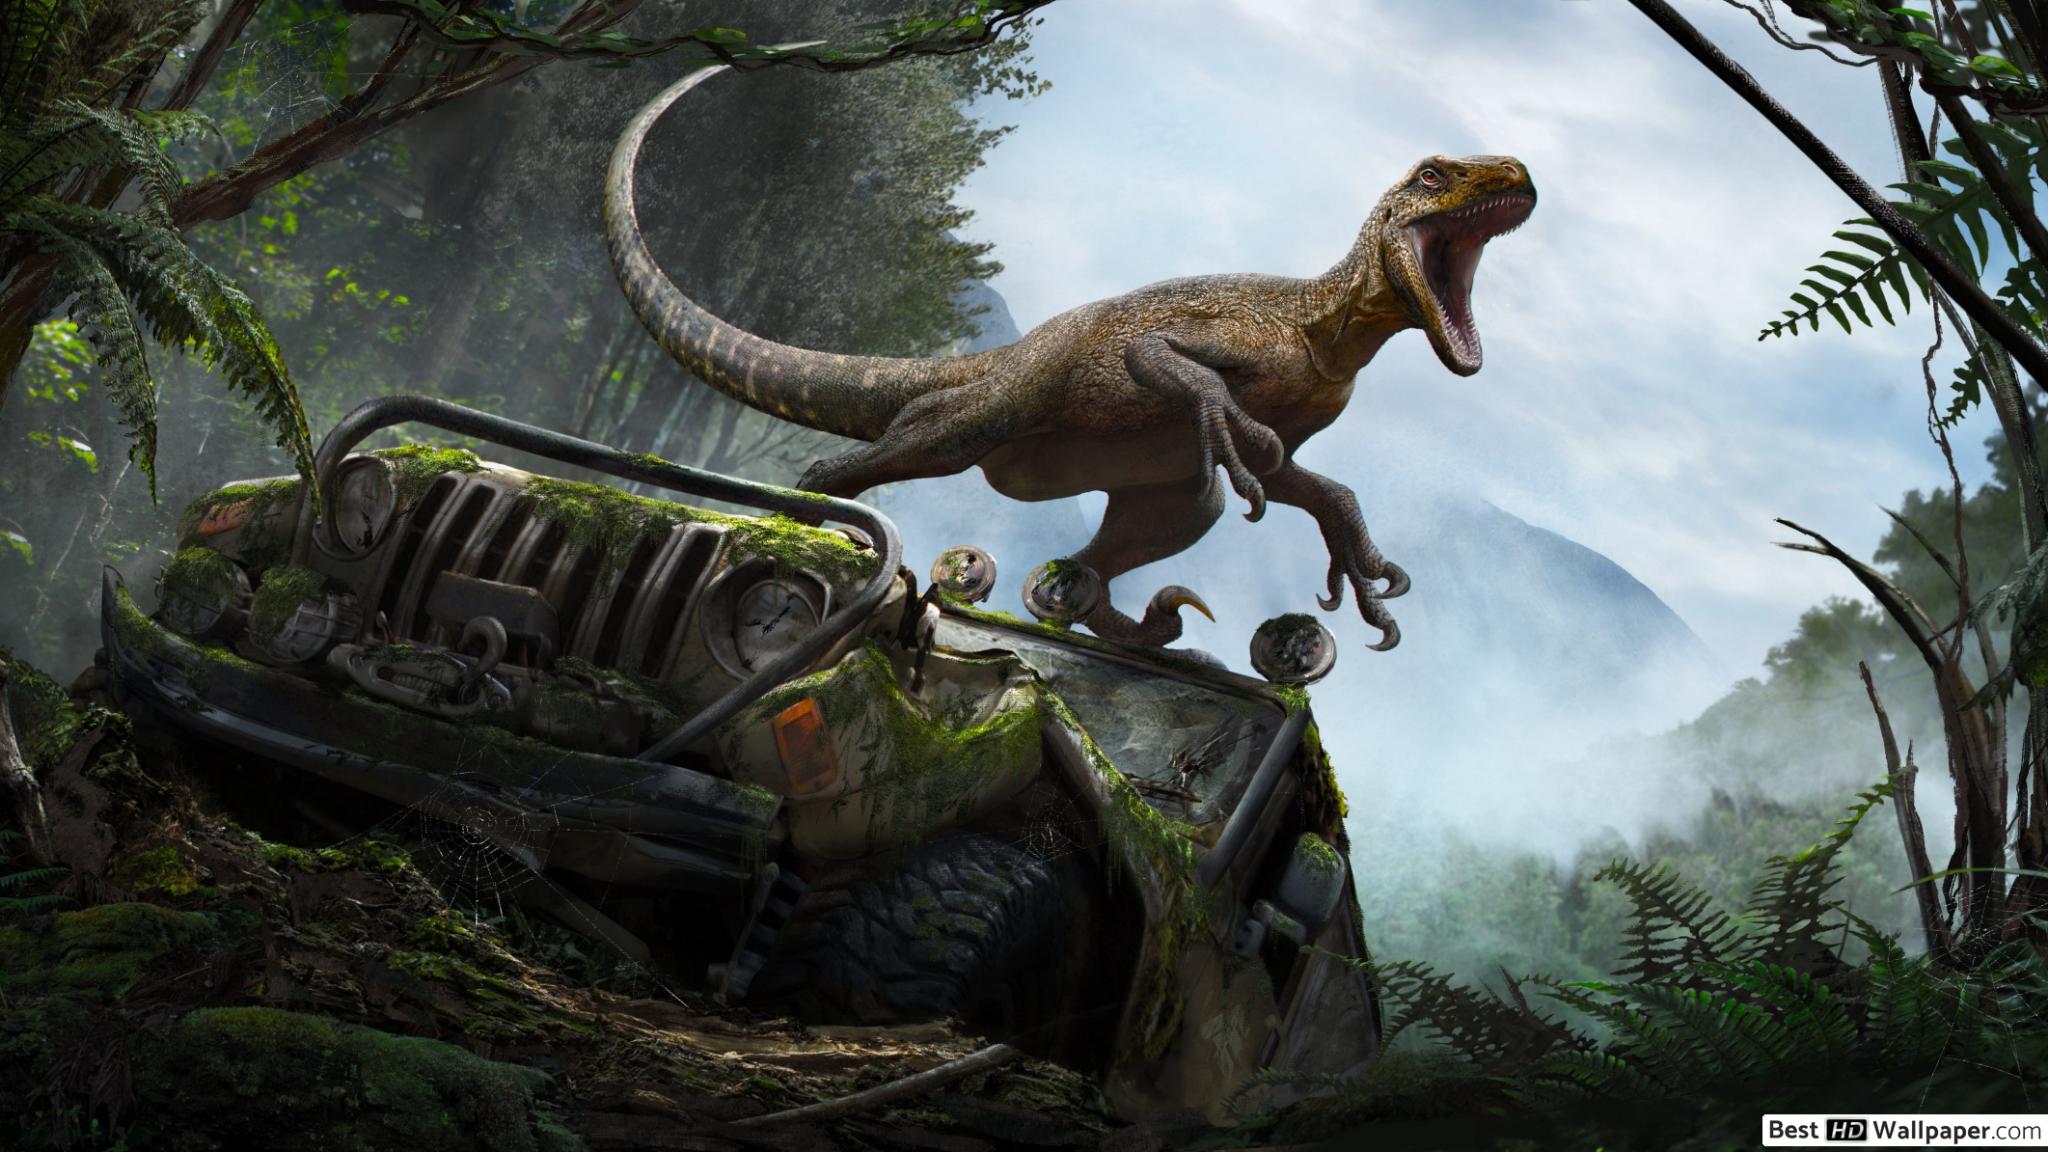 download the last version for windows Jurassic World: Fallen Kingdom